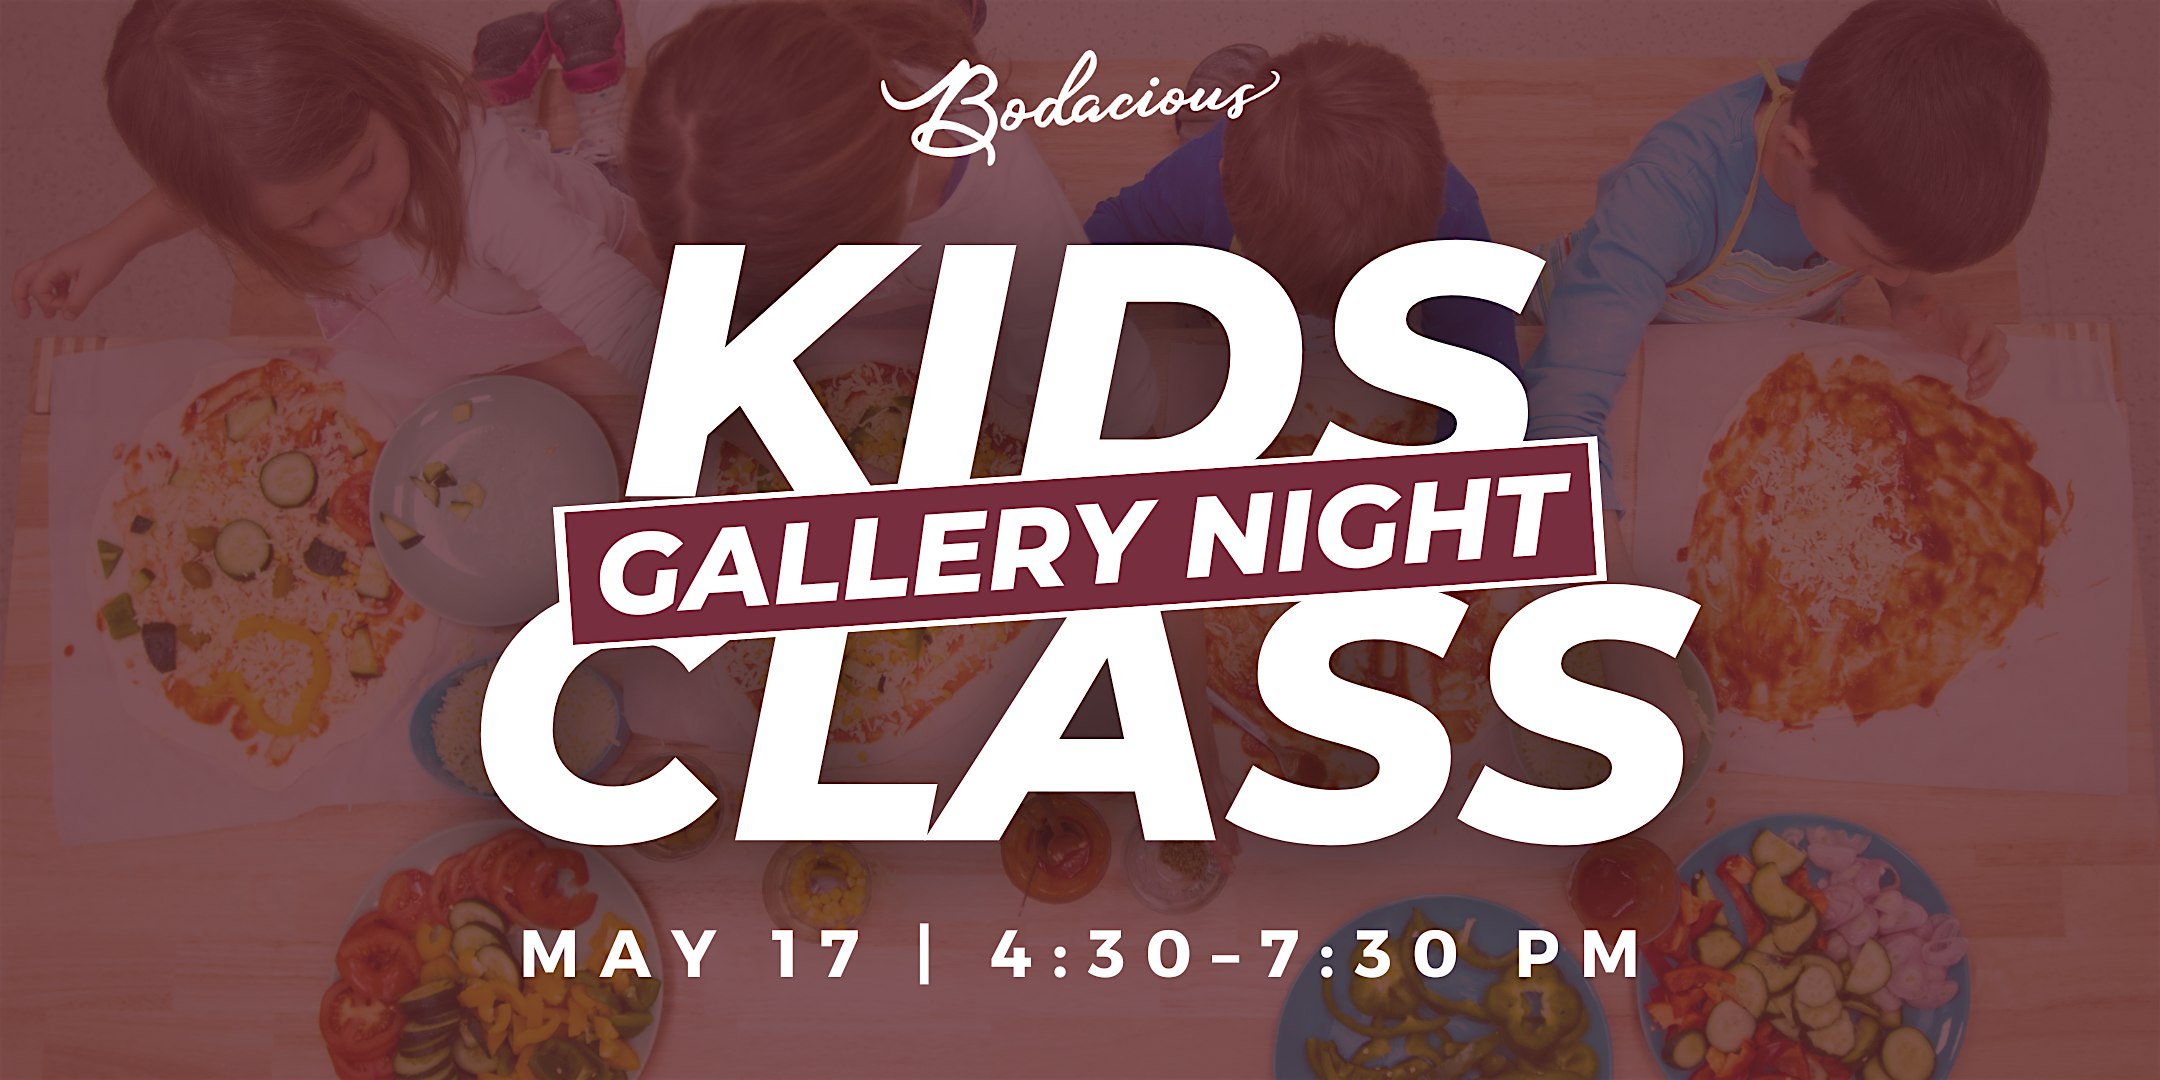 Kids Gallery Night Class